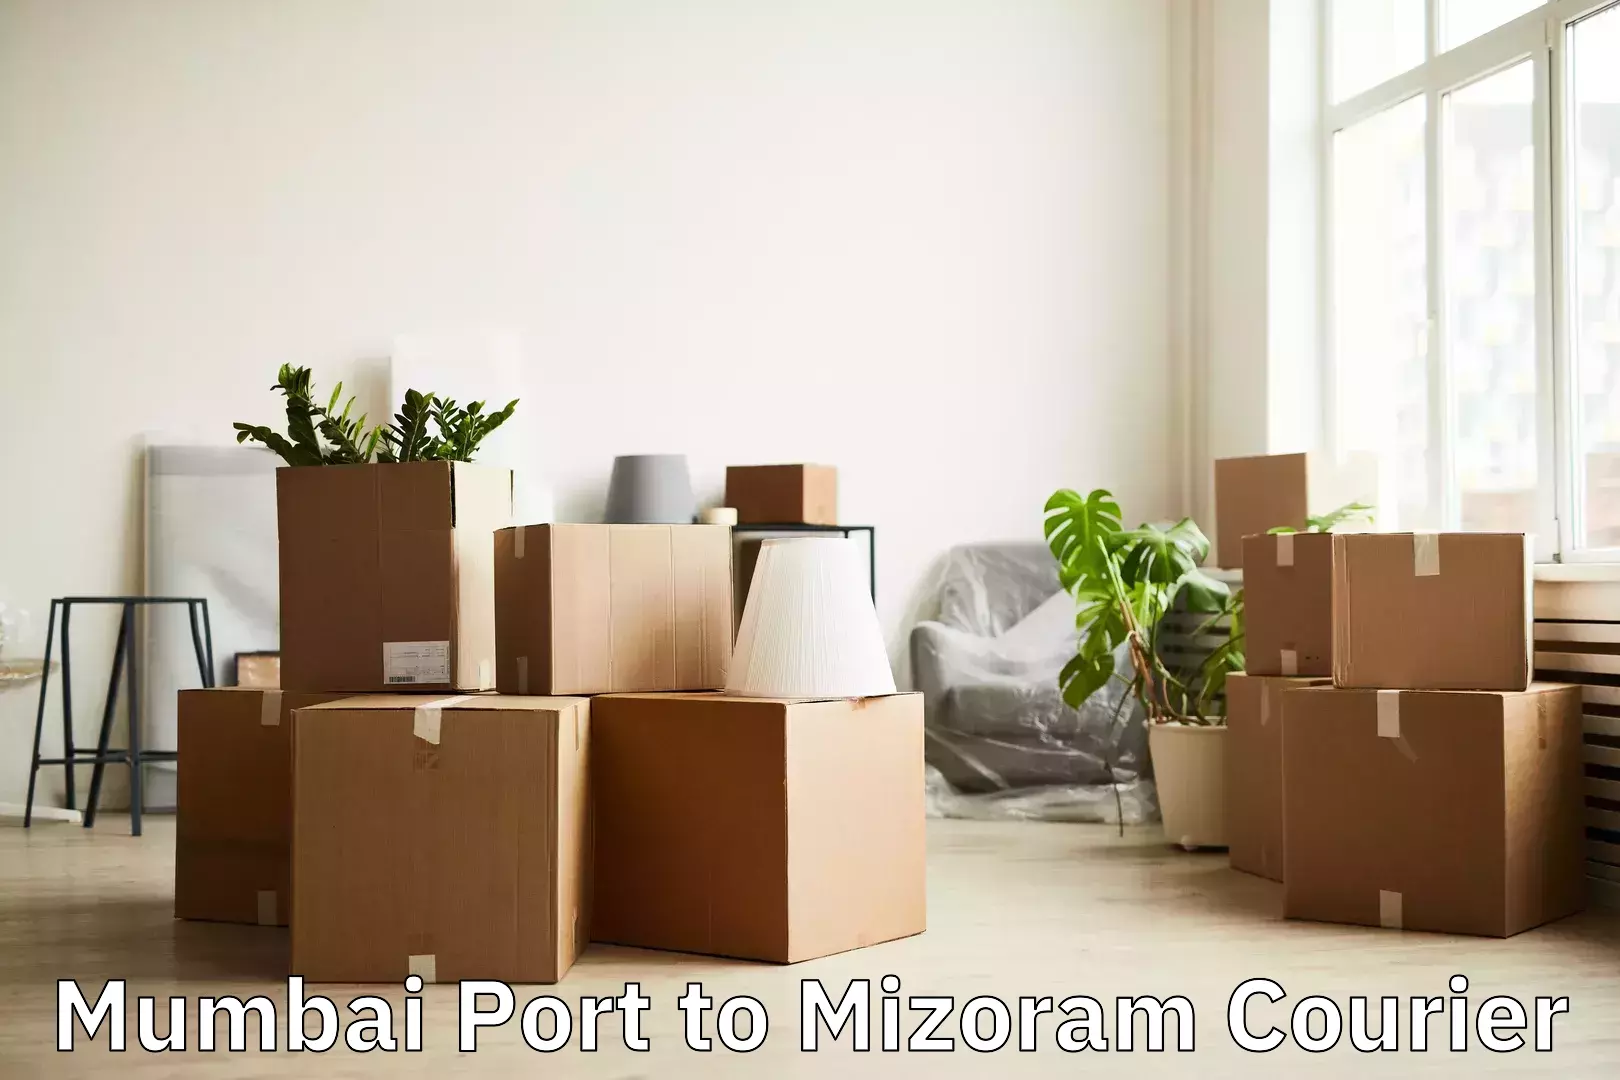 Luggage shipment tracking in Mumbai Port to Aizawl